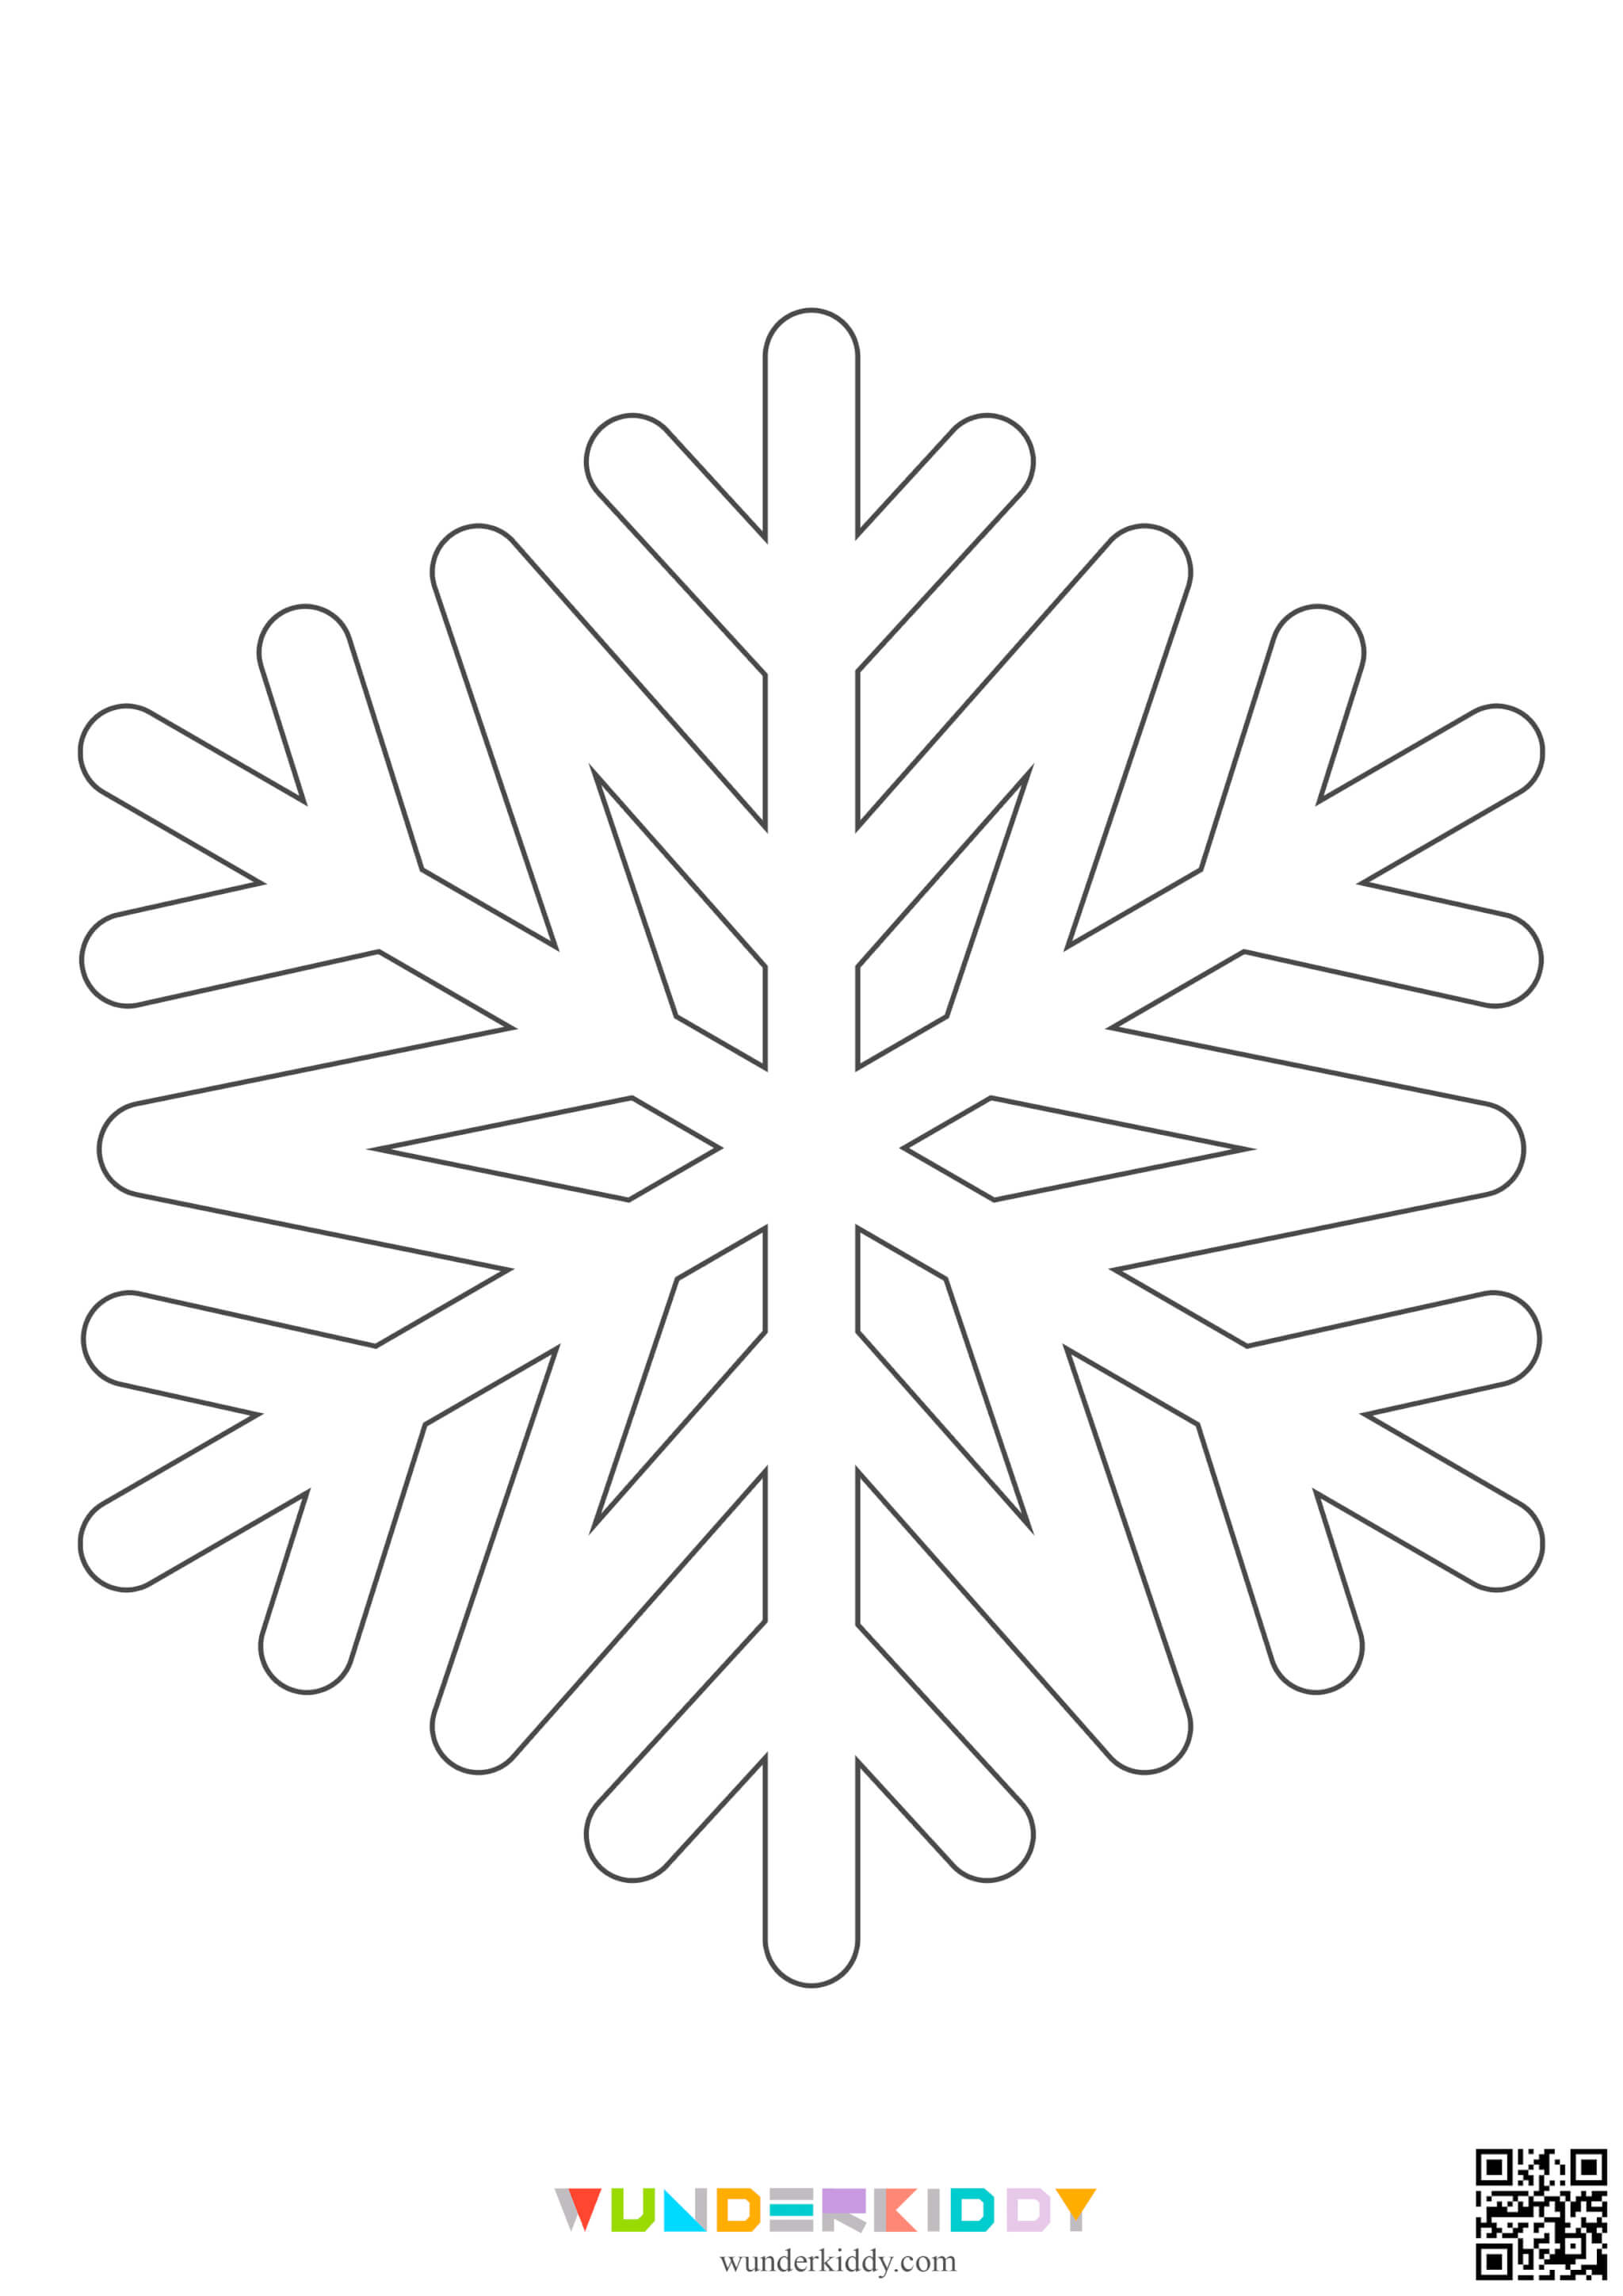 Snowflake Stencil Patterns - Image 9